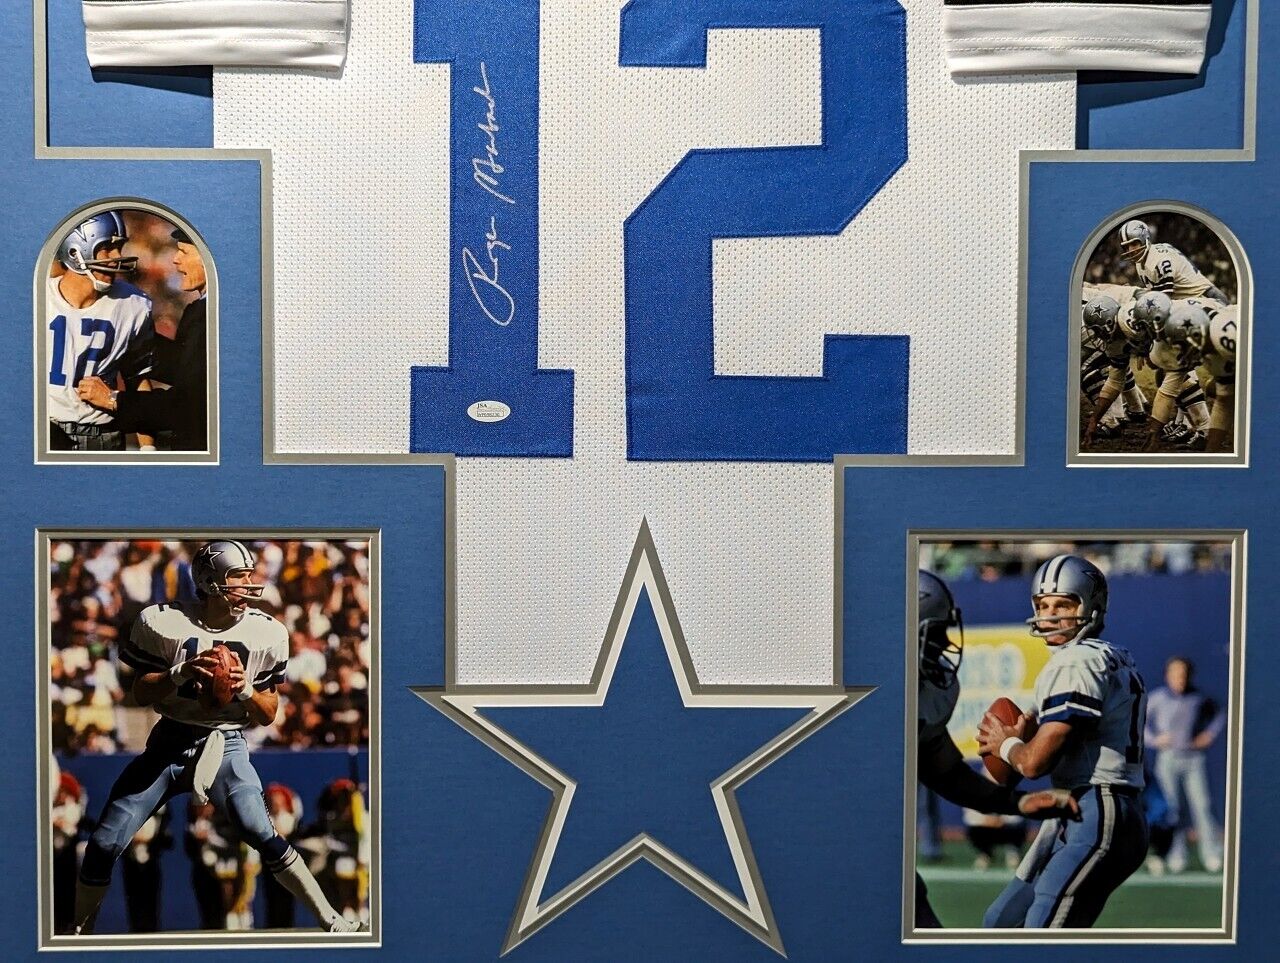 MVP Authentics Framed Dallas Cowboys Roger Staubach Autographed Signed Jersey Jsa Coa 540 sports jersey framing , jersey framing